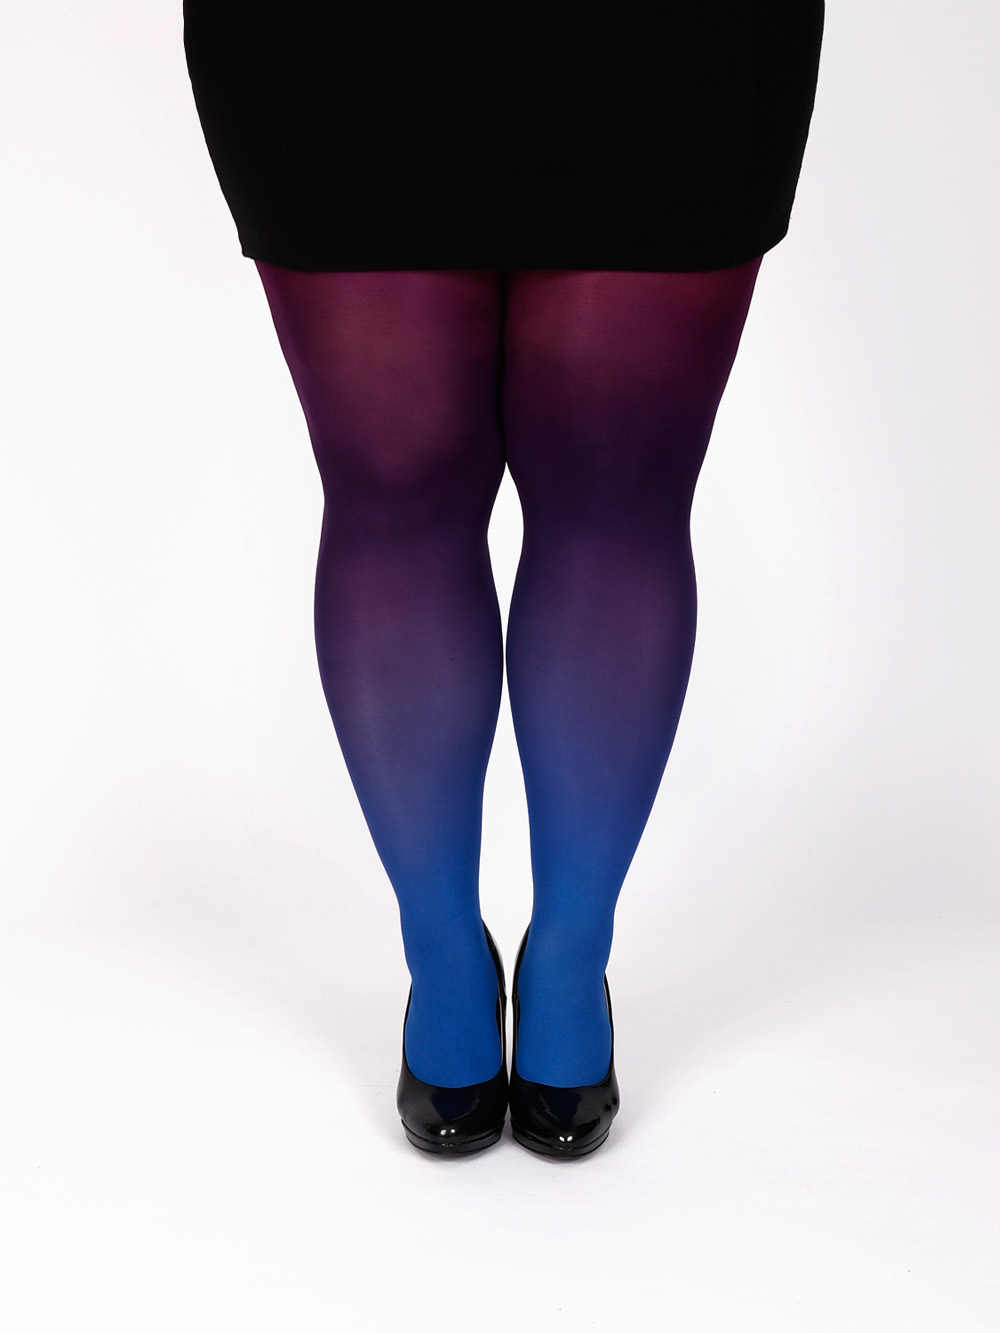 Plus size sapphire-burgundy tights - Virivee Tights - Unique